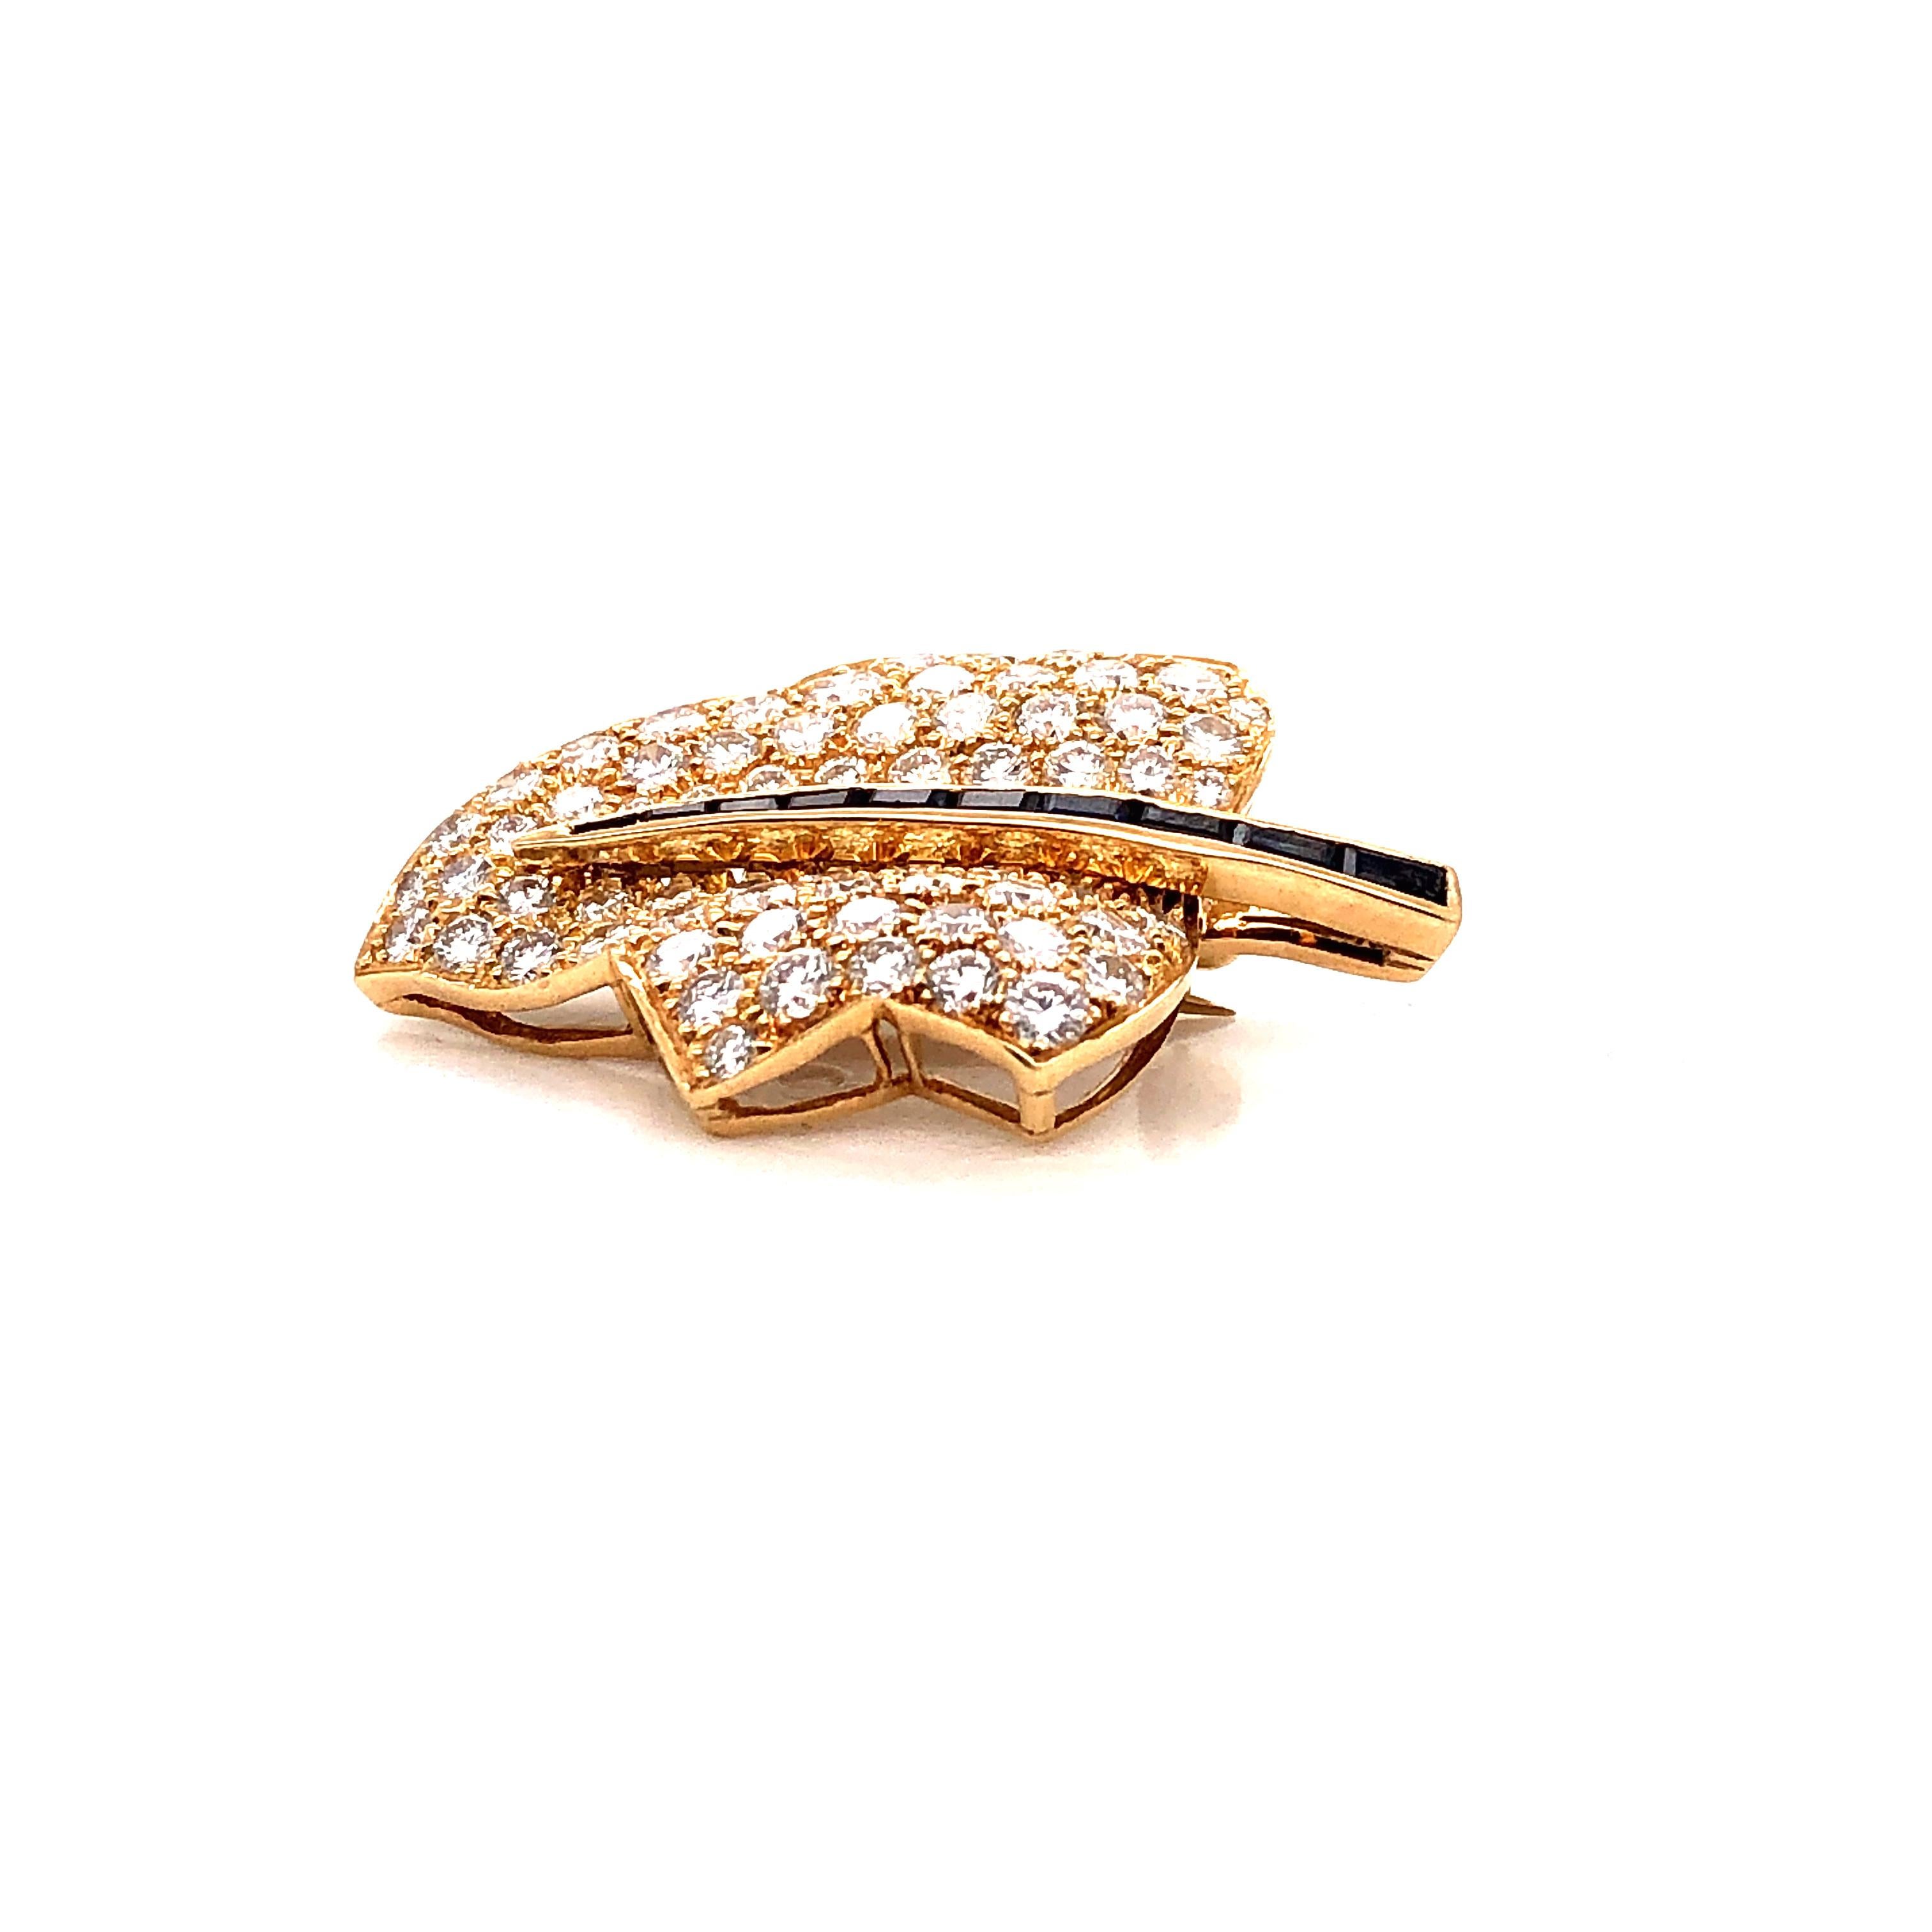 Taille ronde Petite broche Oscar Heyman en forme de feuille d'érable en or pavé de diamants en vente